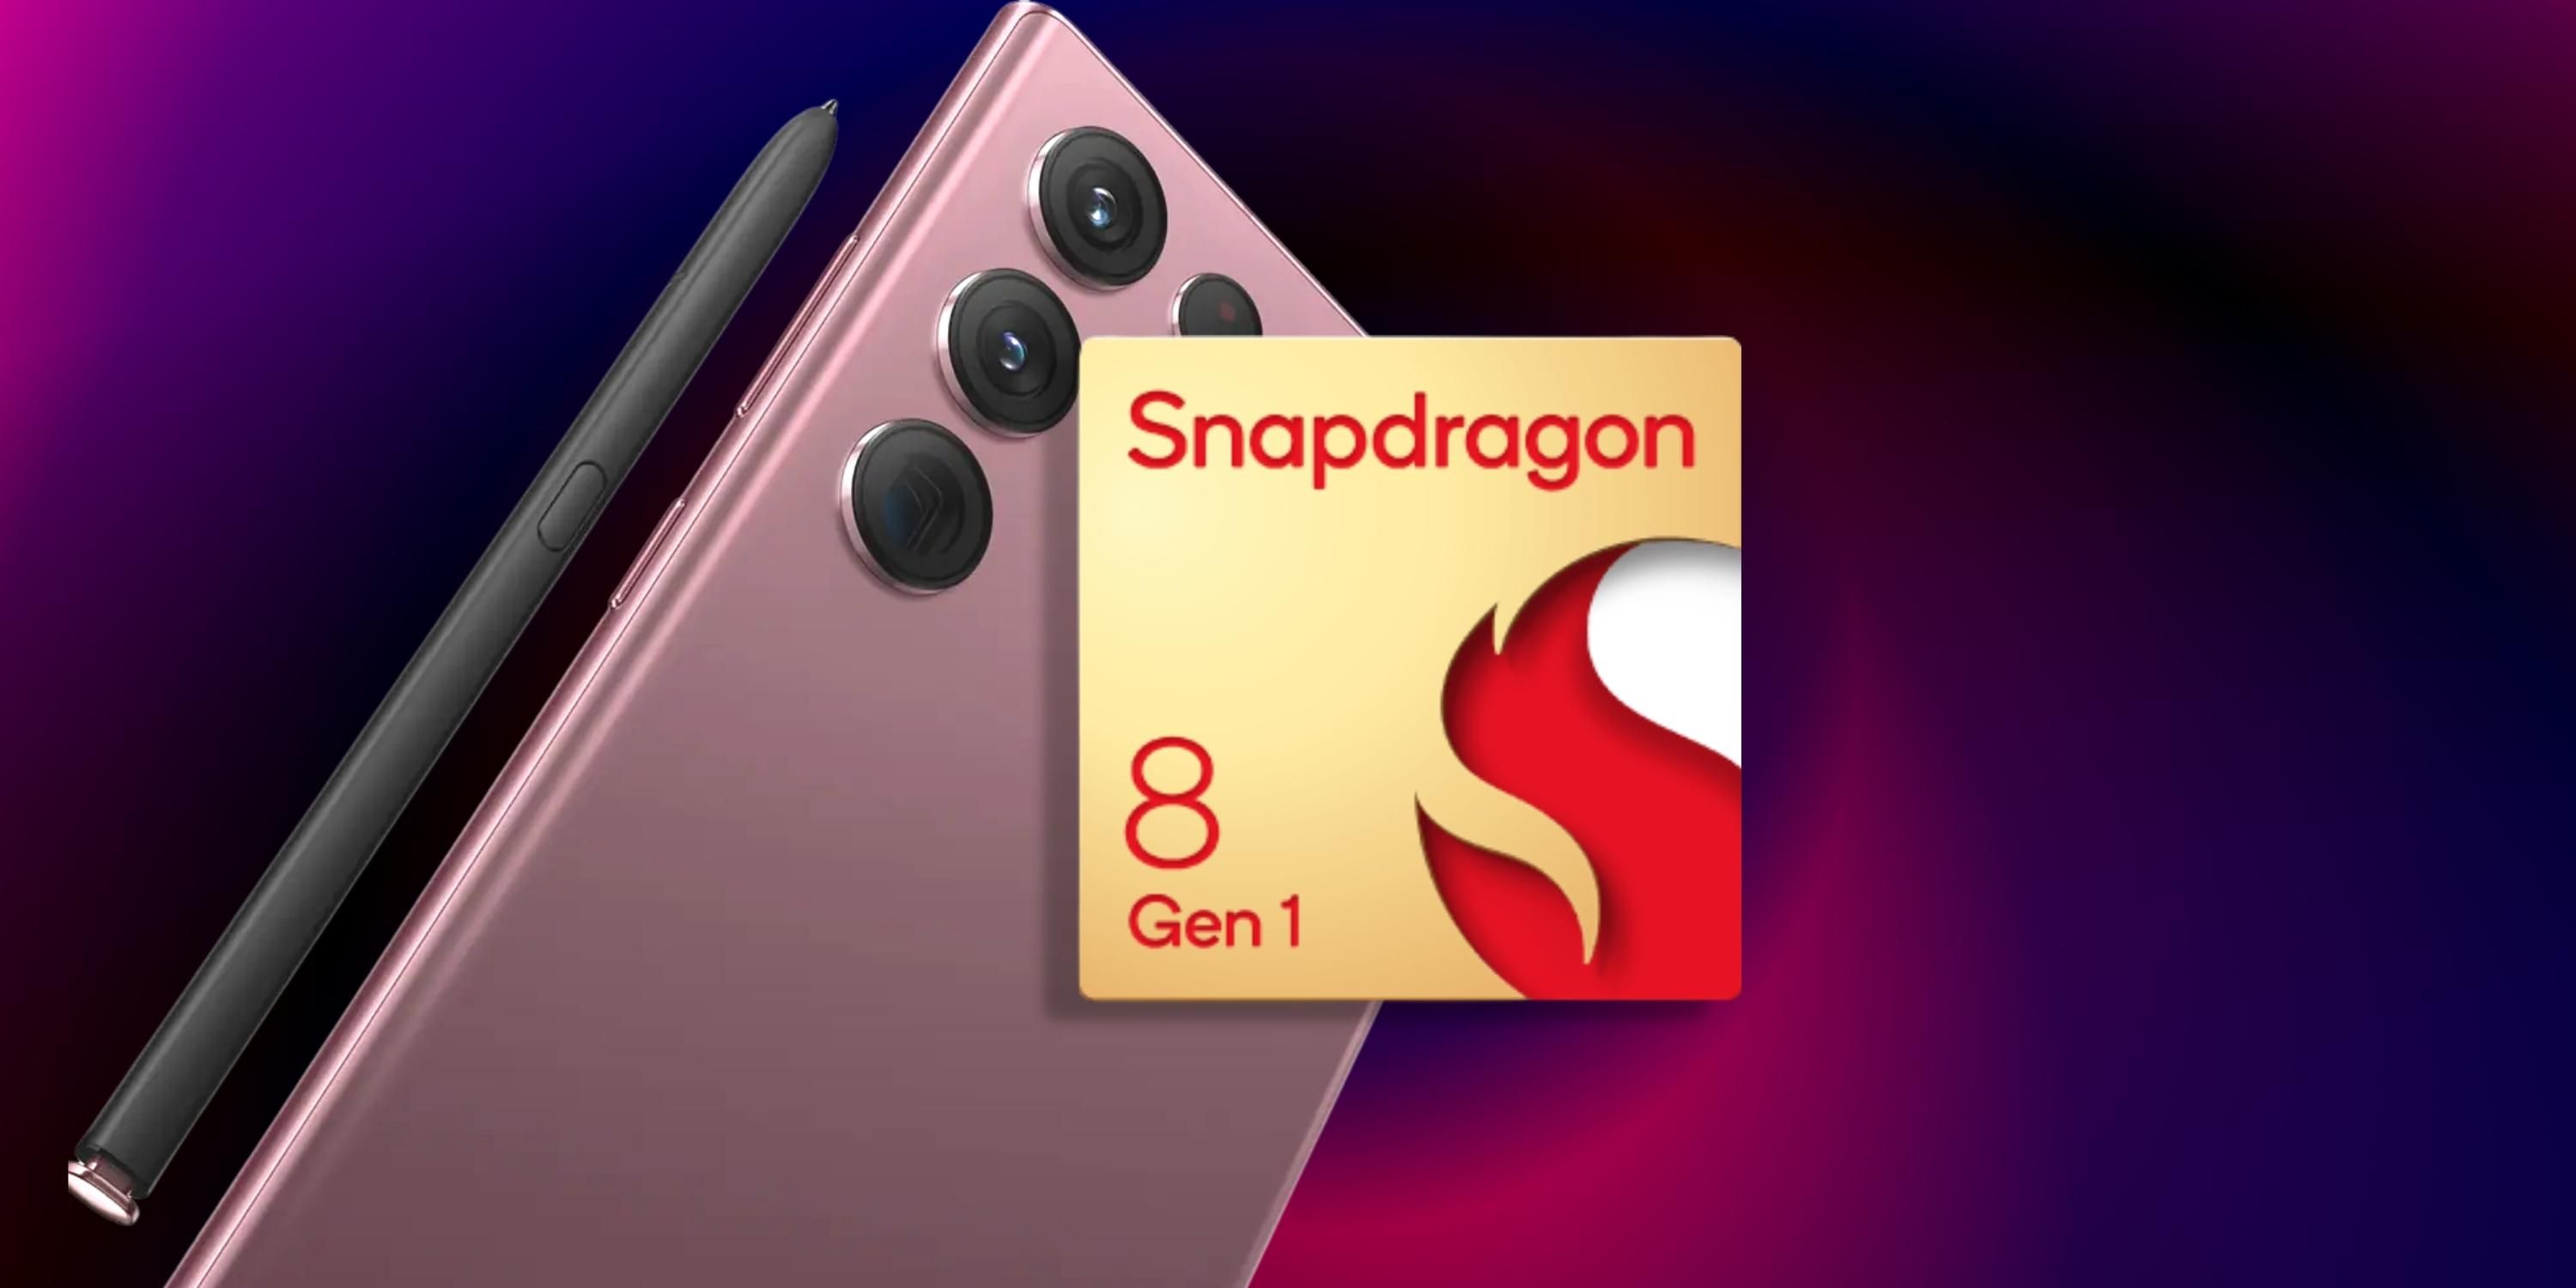 Snapdragon 8 Gen 1 with Samsung Galaxy S22 Ultra